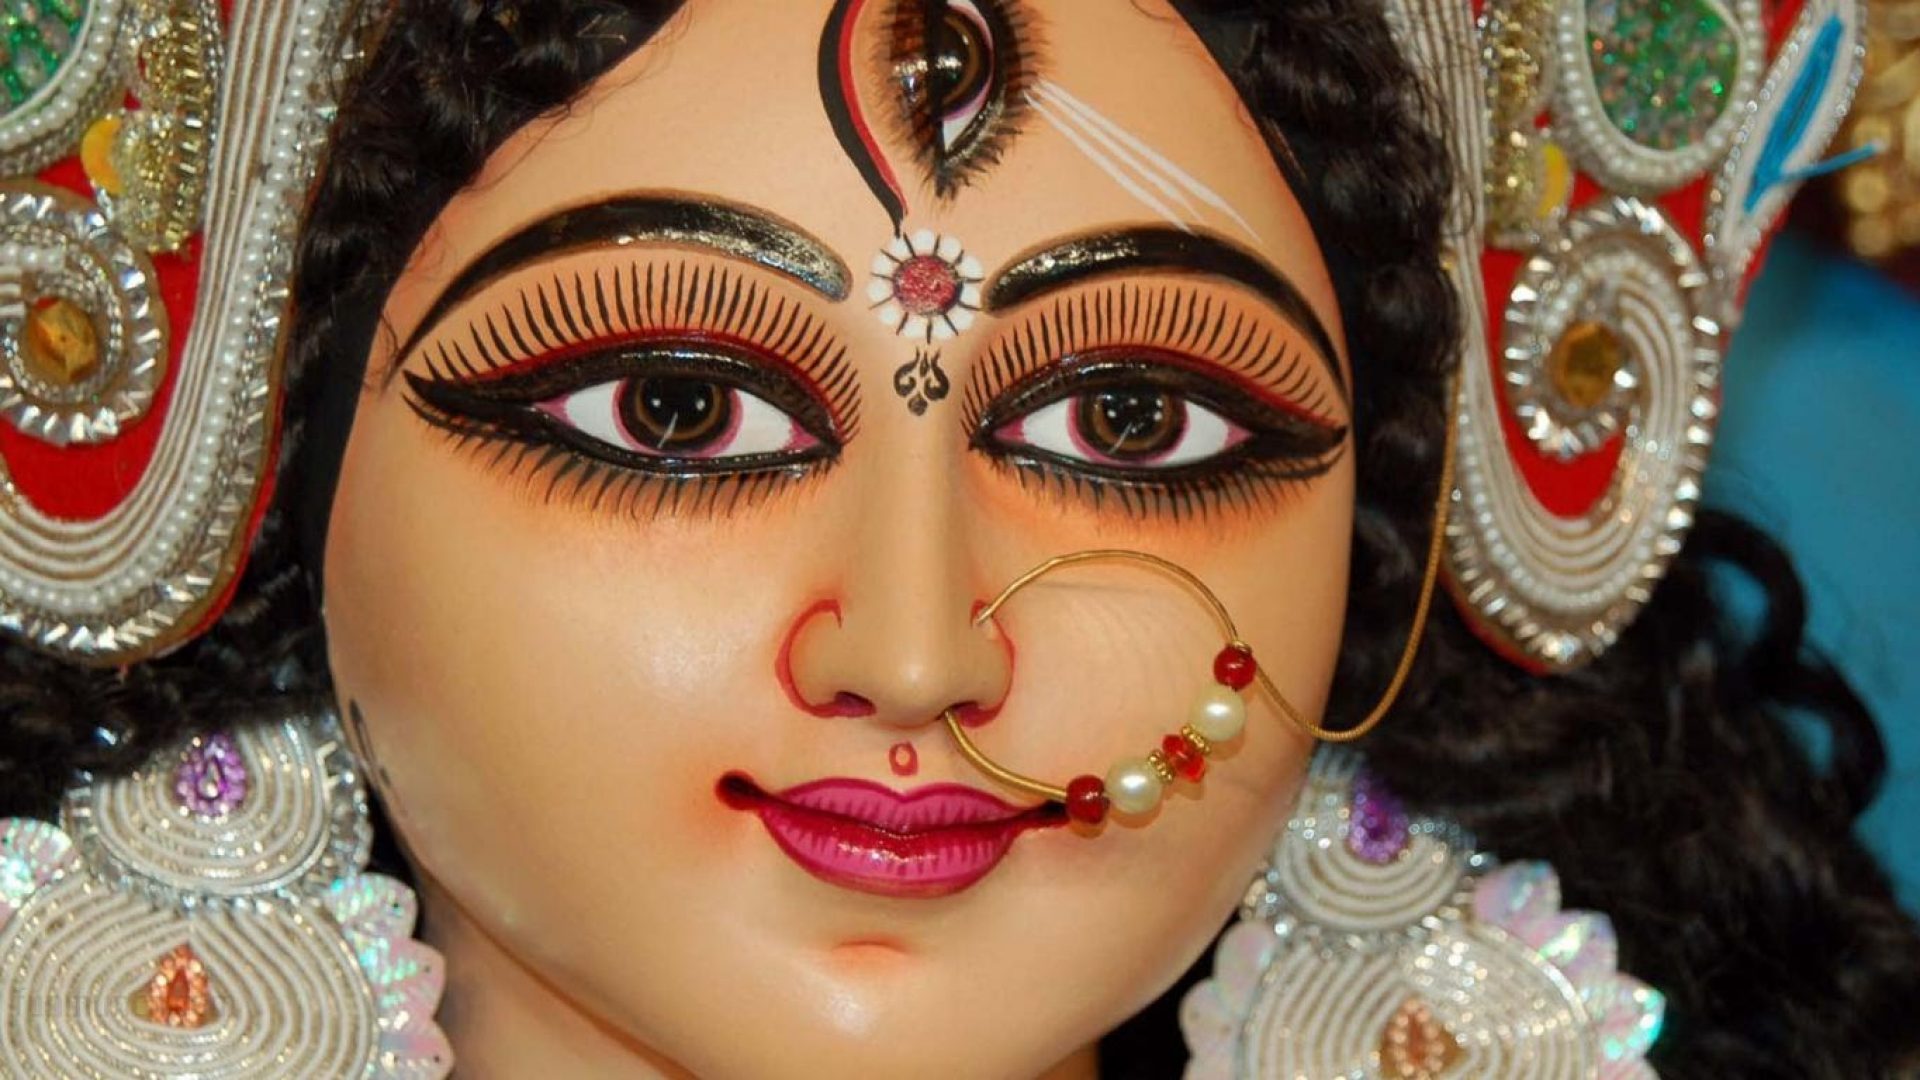 Maa Durga Images For Whatsapp Dp | Goddess Maa Durga